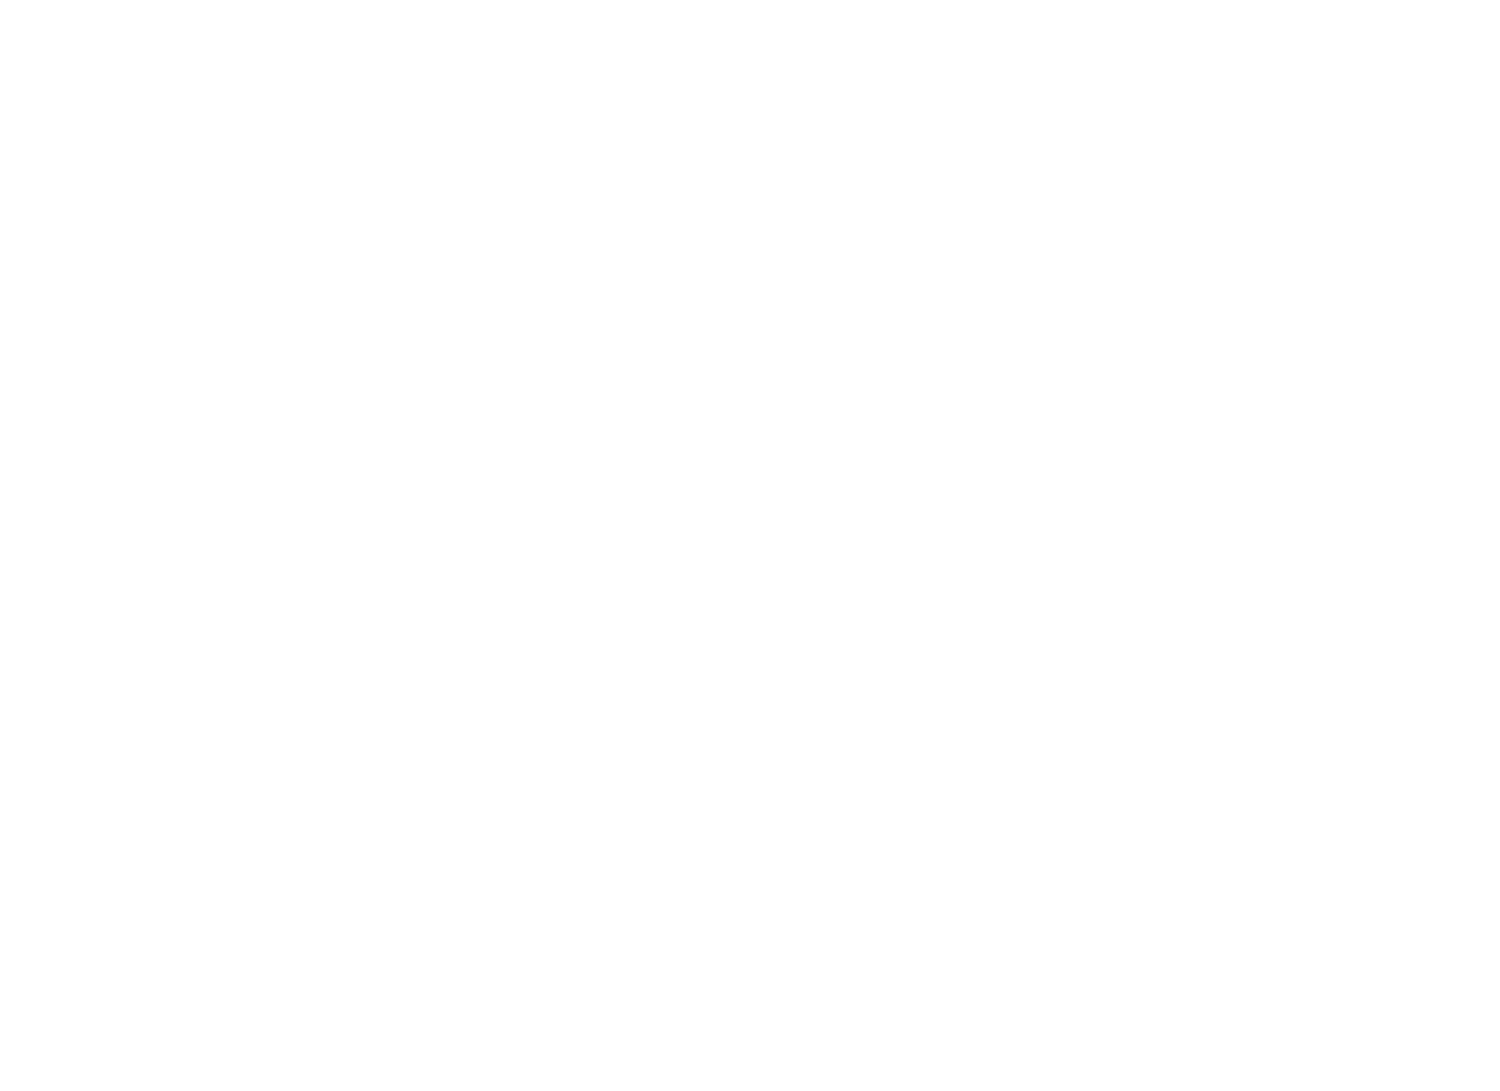 The General Deli & Cafe